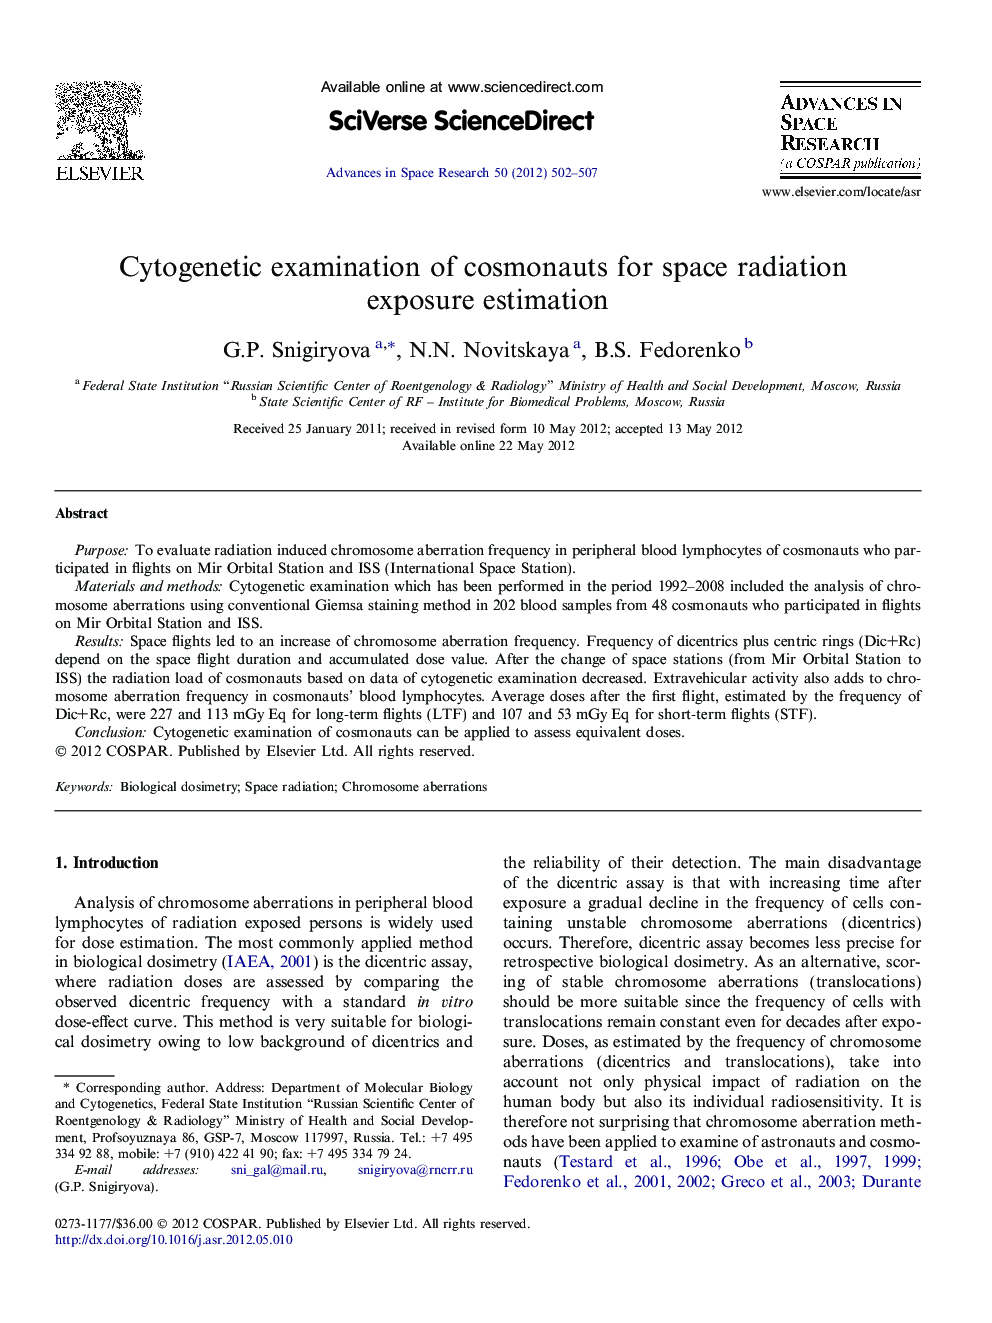 Cytogenetic examination of cosmonauts for space radiation exposure estimation